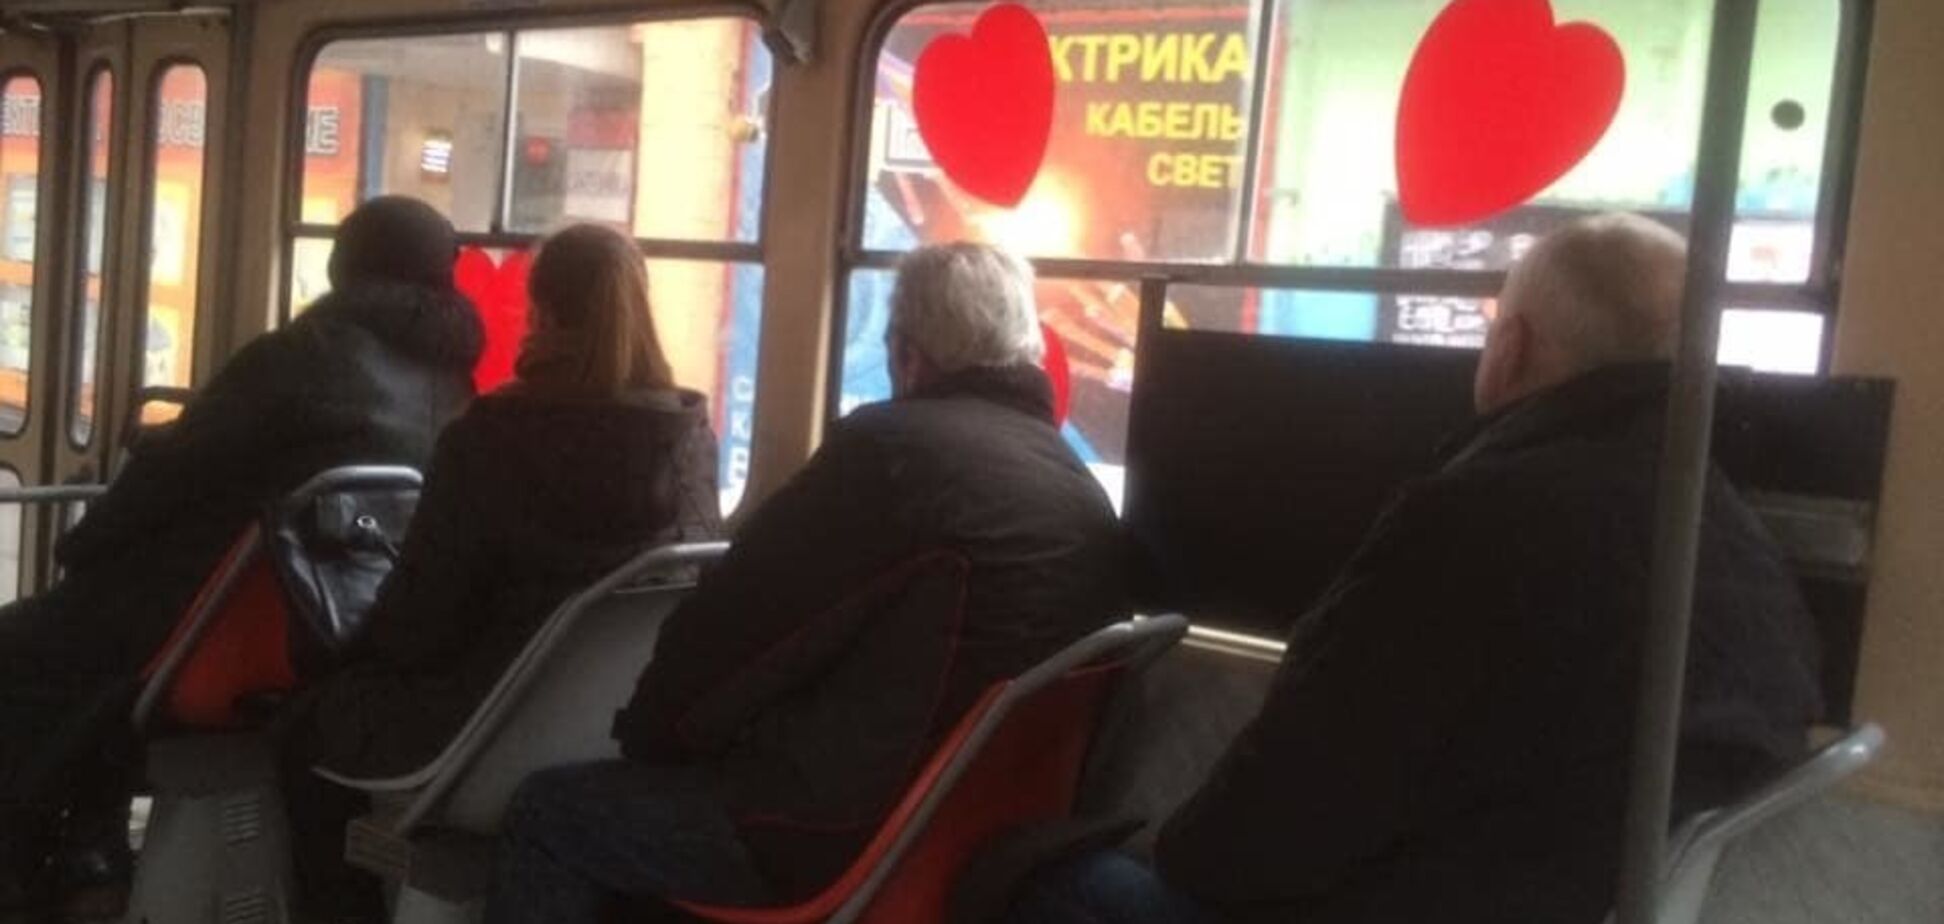 В центре Киева заметили трамвай в сердечках: опубликовано фото